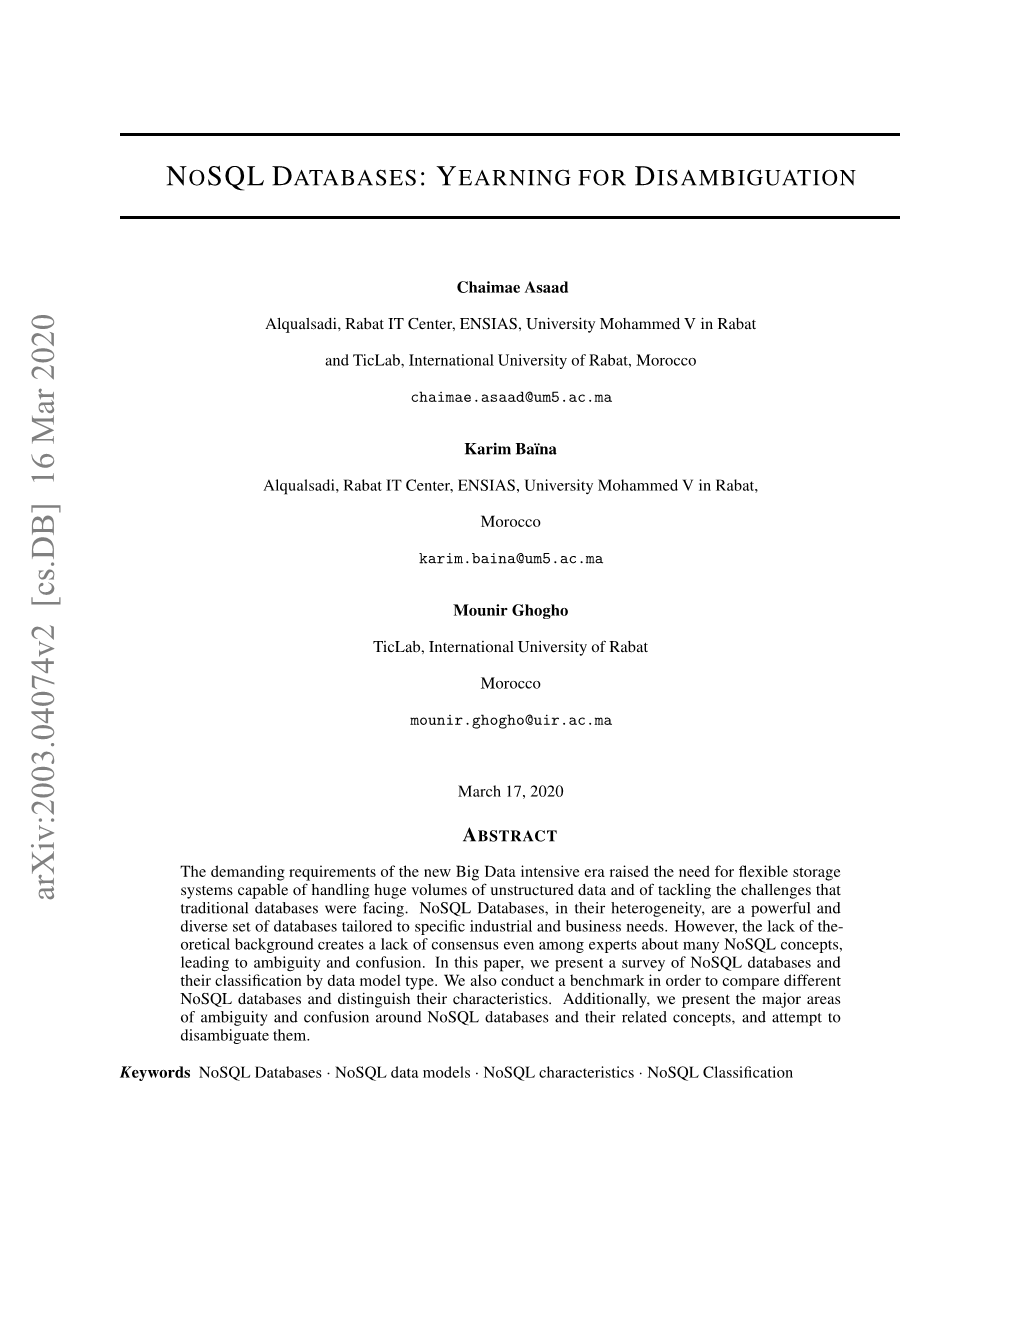 Nosql Databases: Yearning for Disambiguation